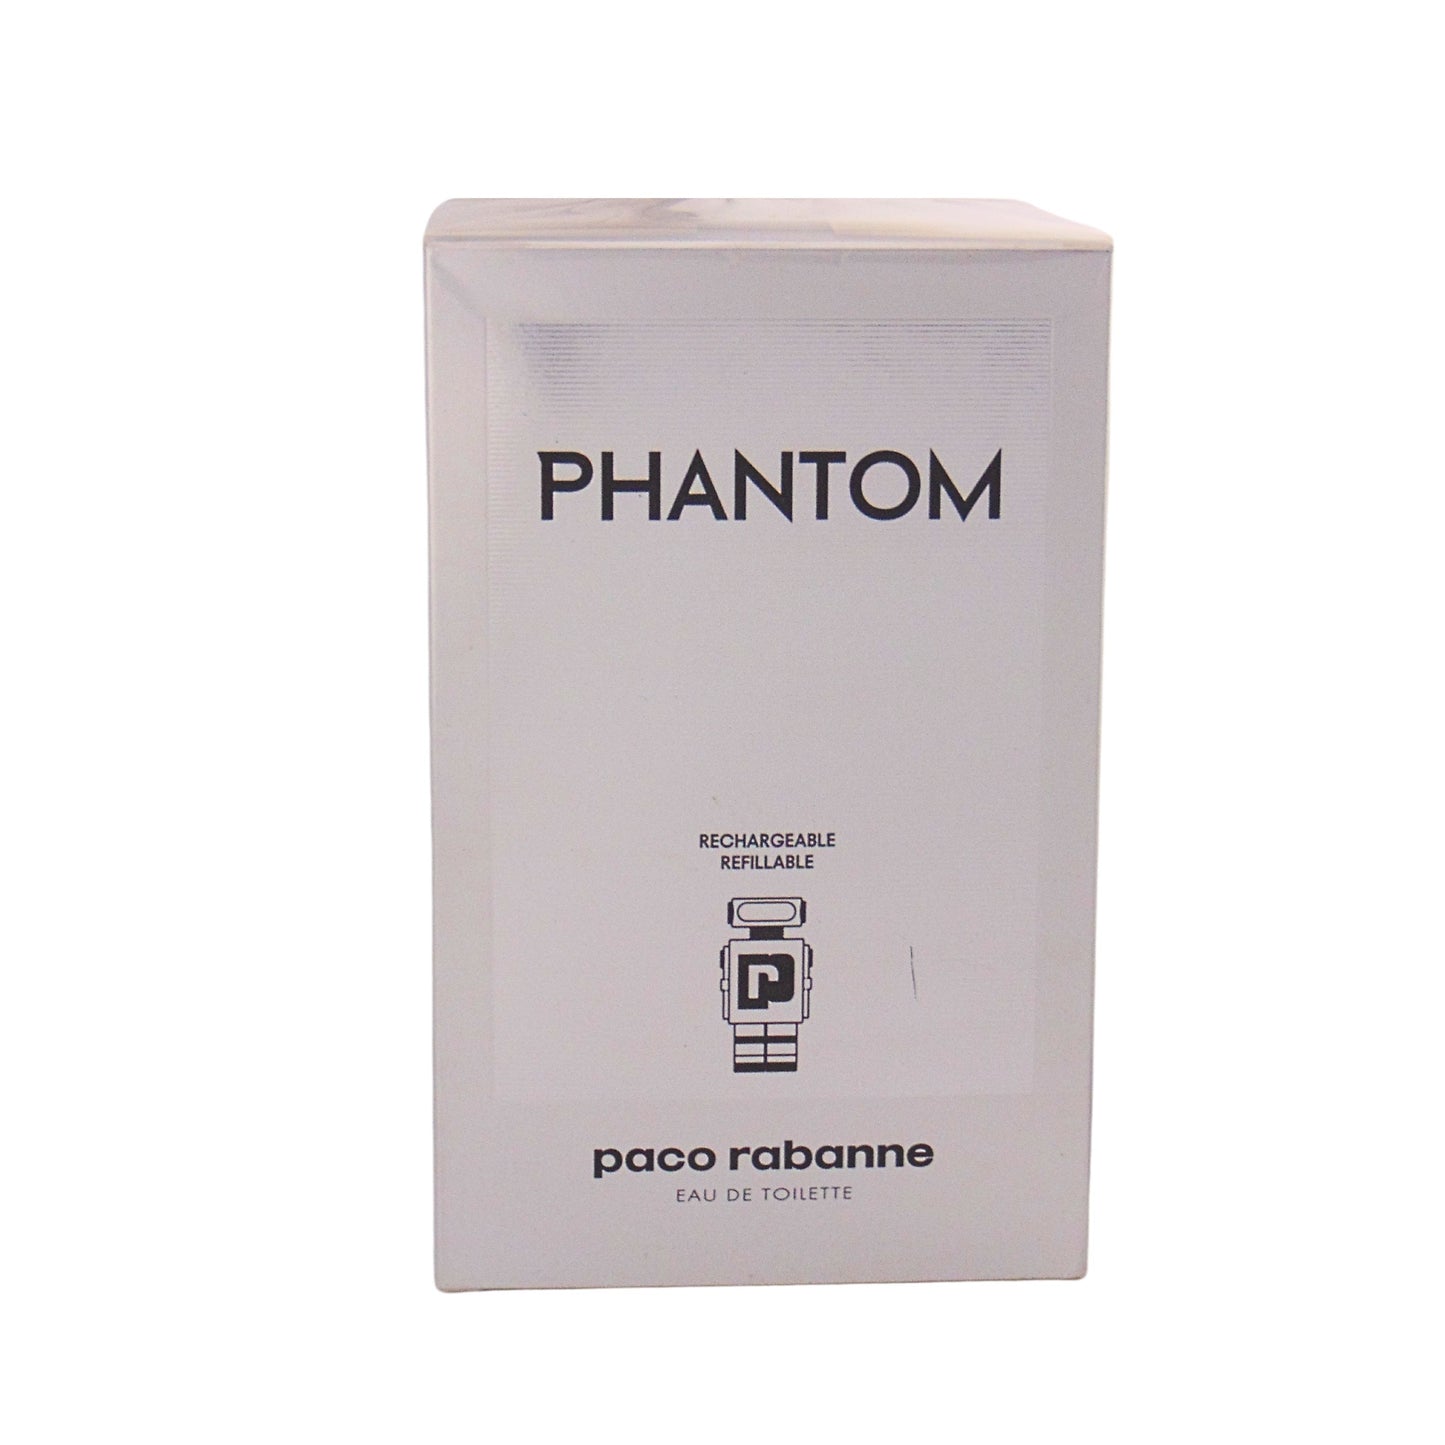 Paco Rabanne Phantom Eau de Toilette for Men